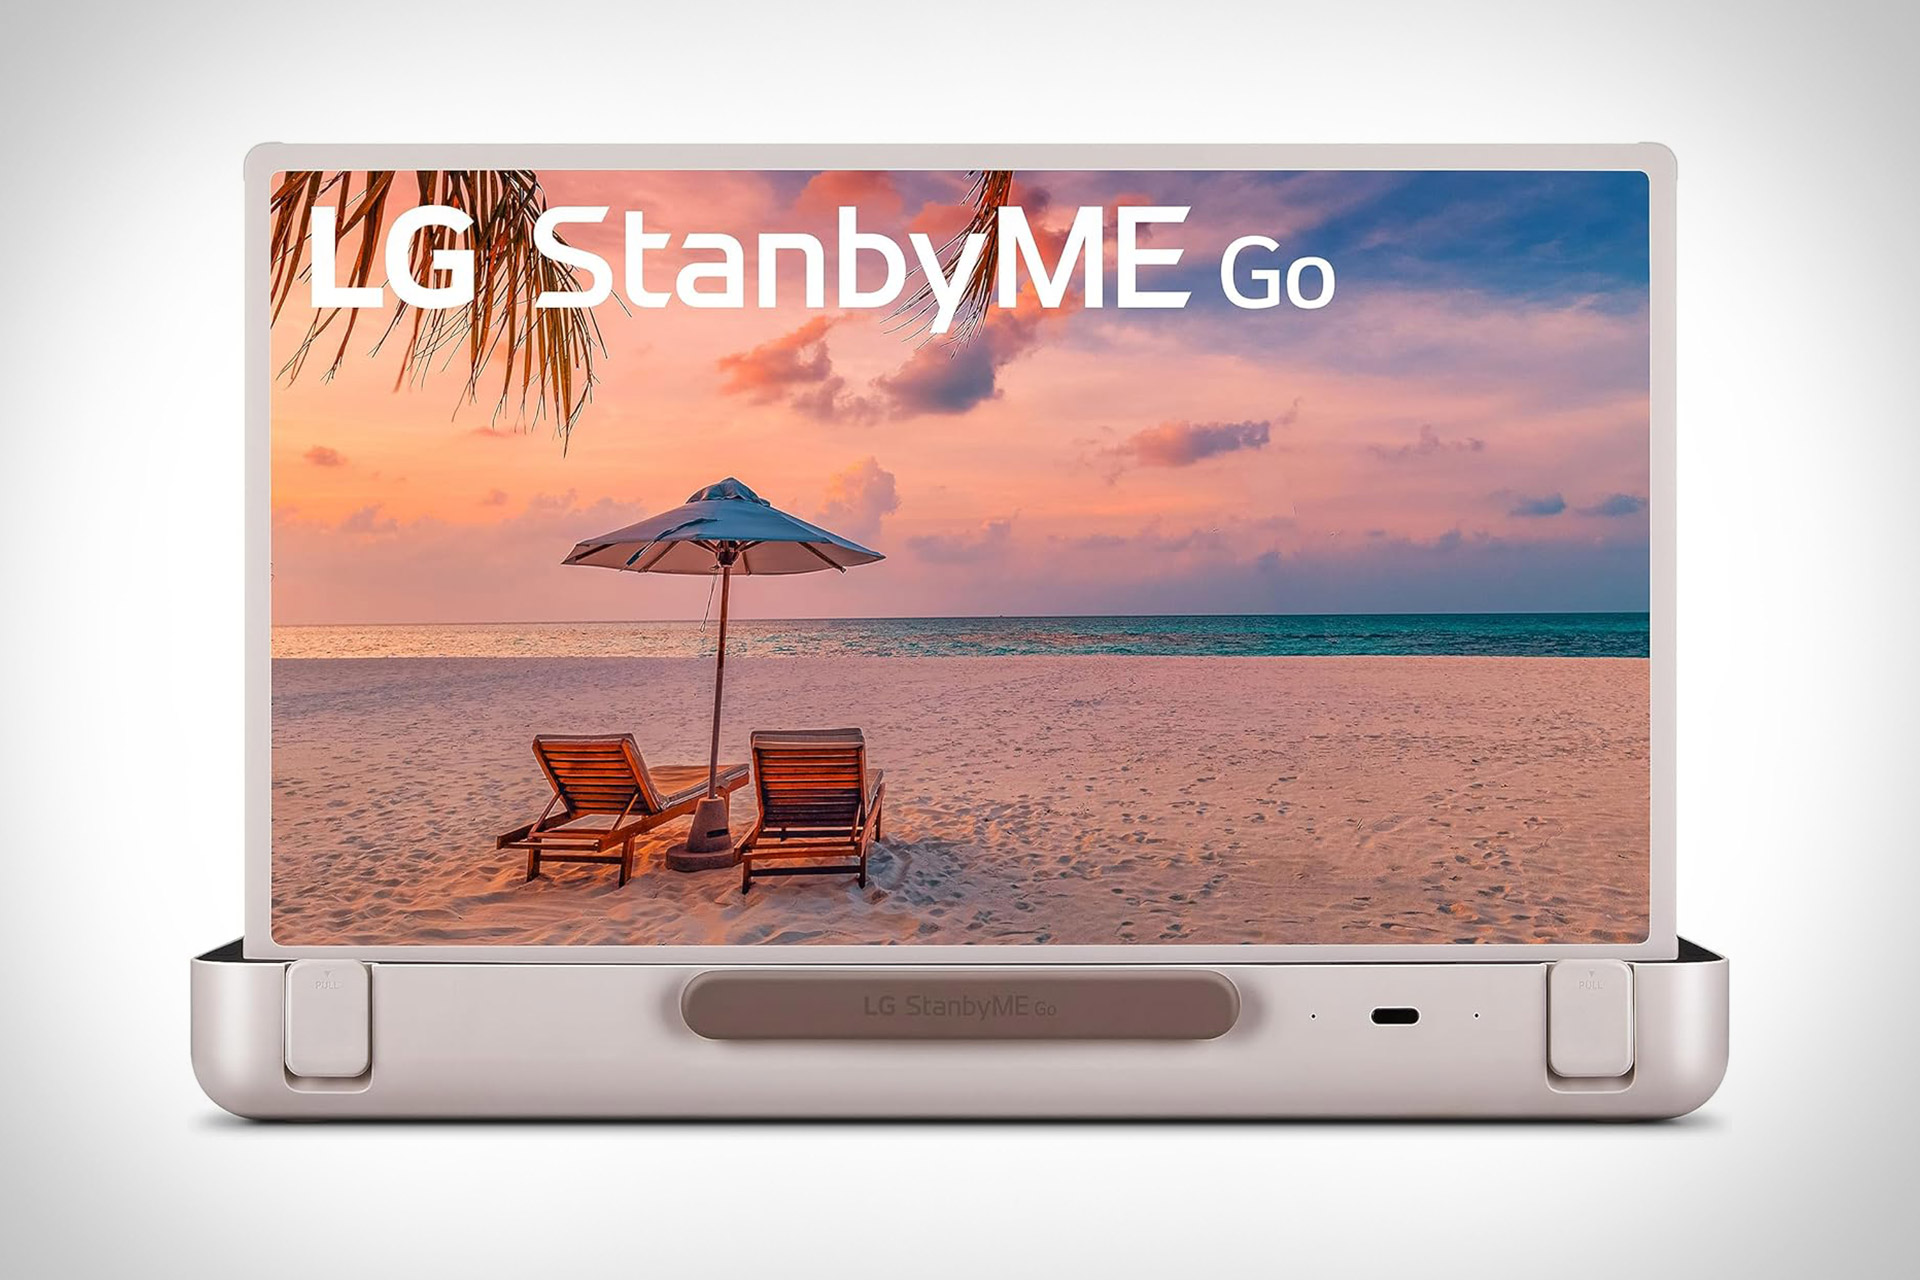 LG StanbyME Go Portable Screen